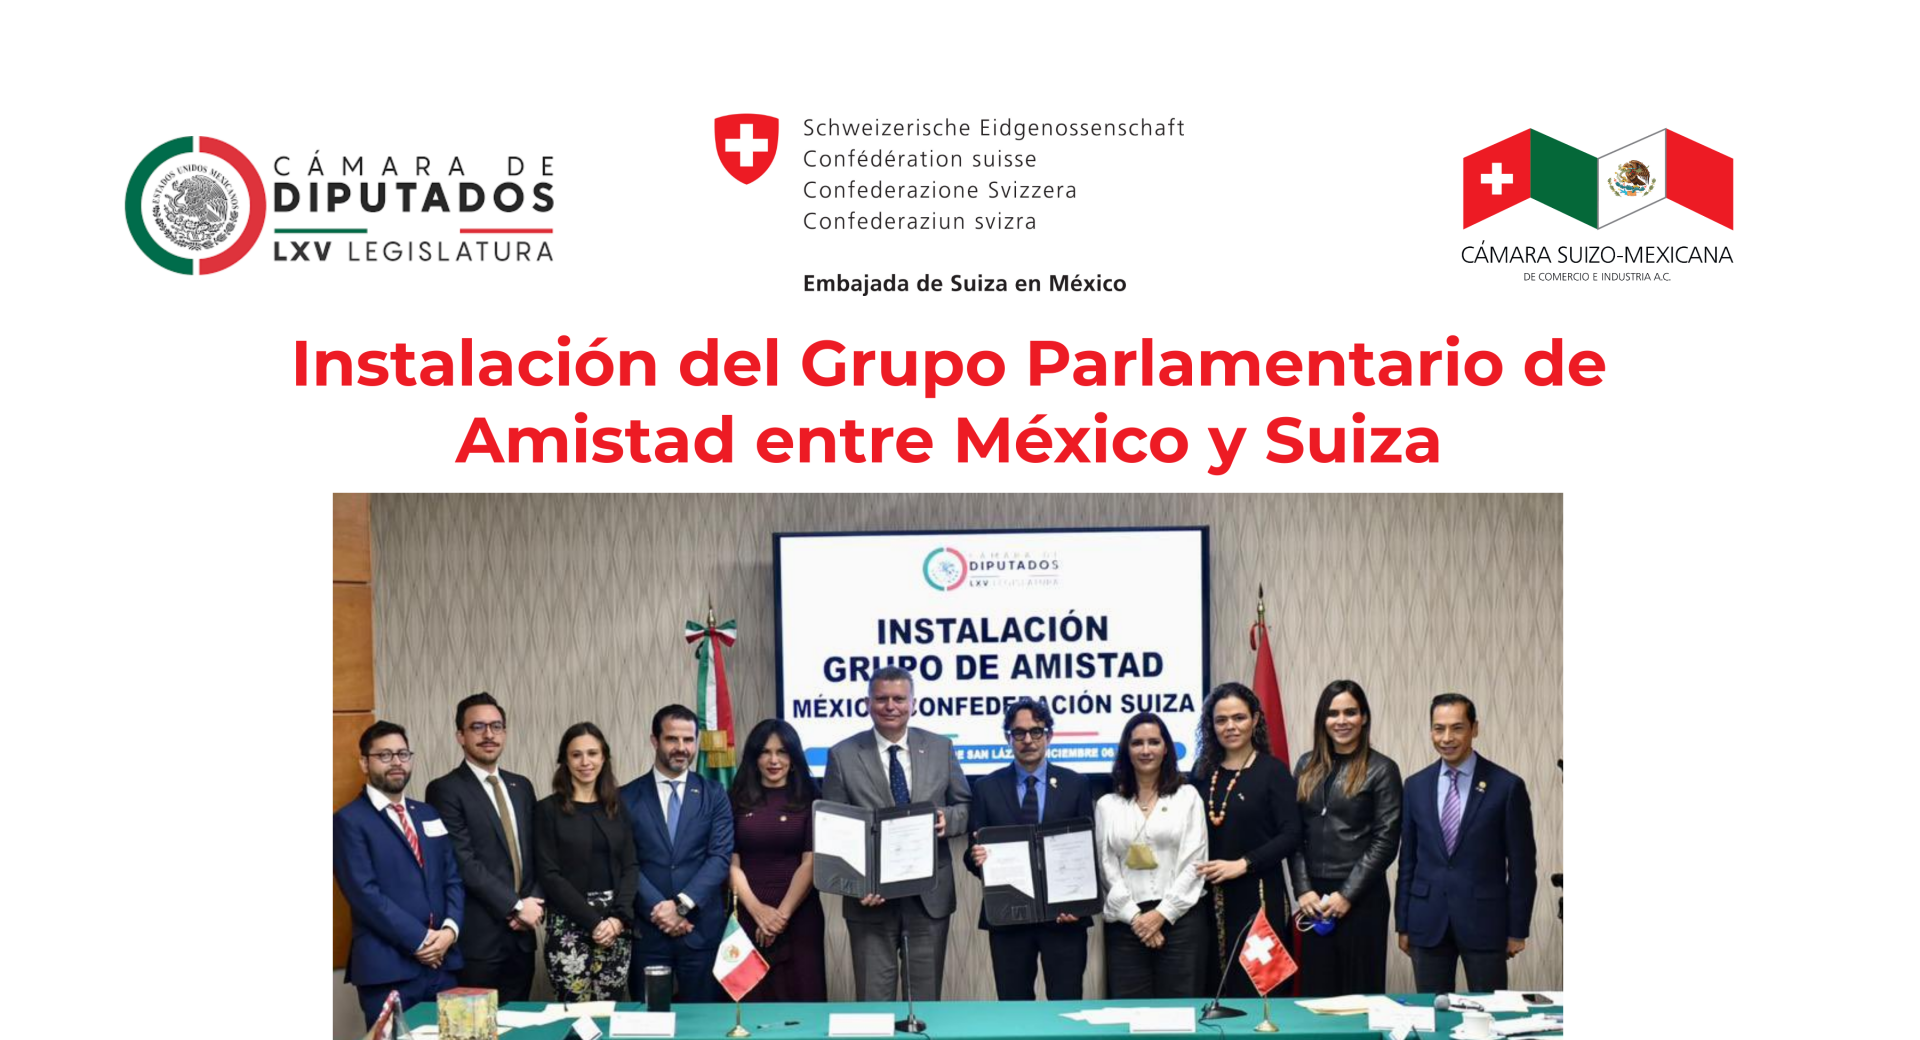 Installation of the Parliamentary Friendship Group Swizterland-Mexico